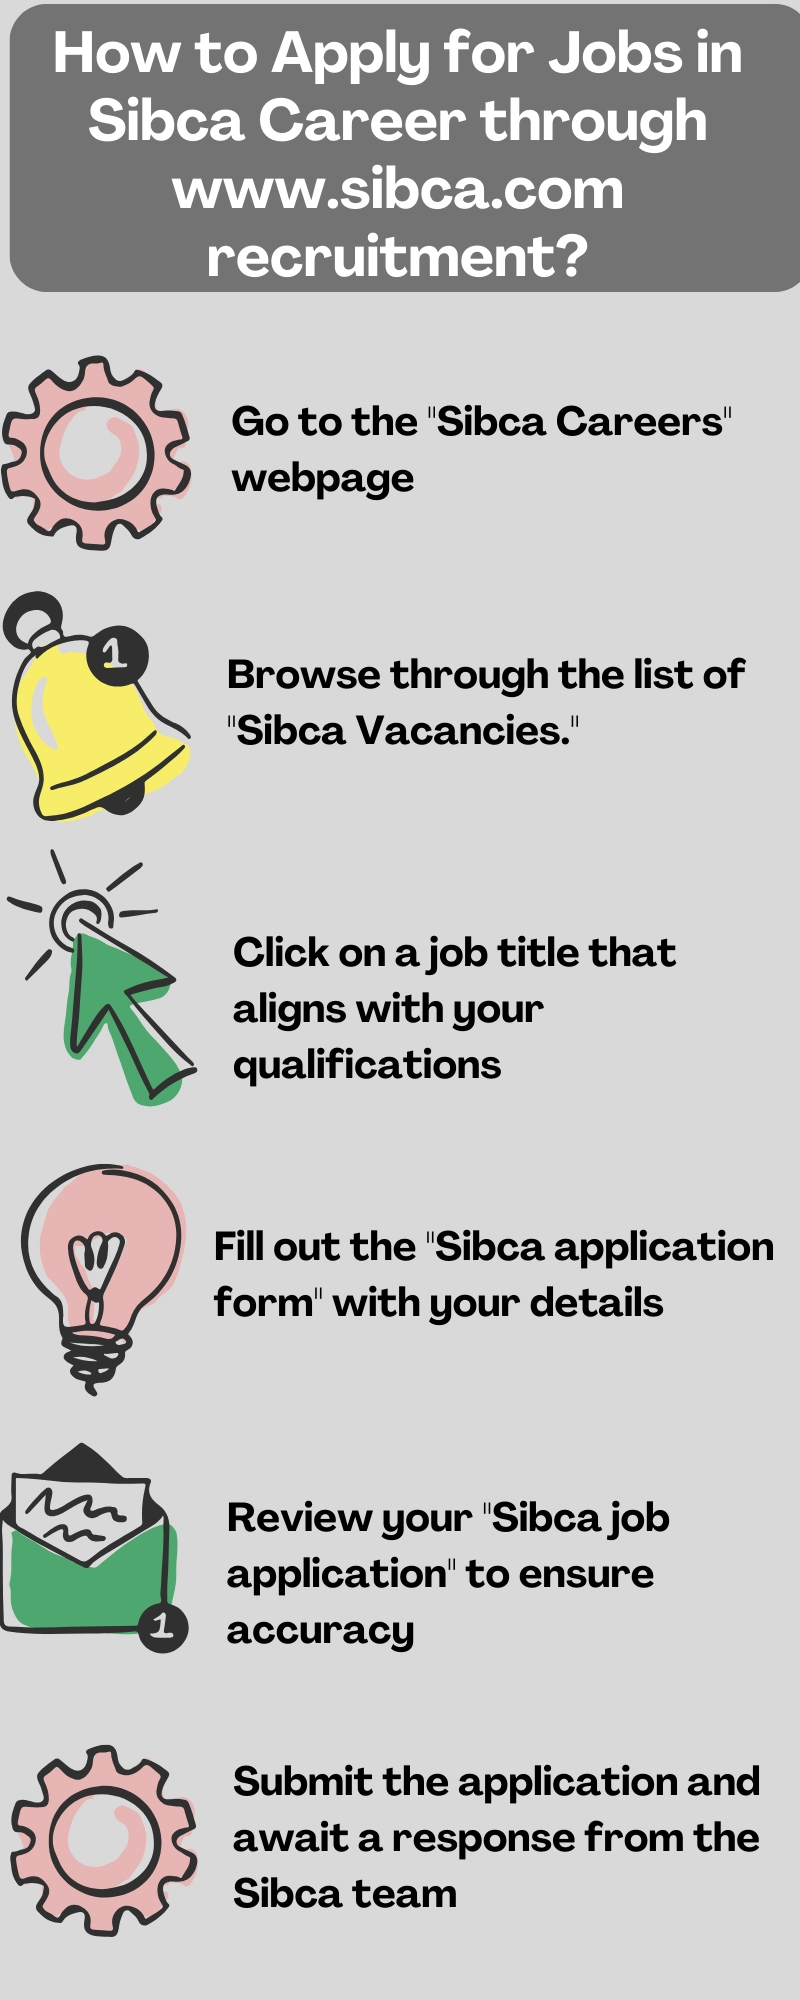 How to Apply for Jobs in Sibca Career through www.sibca.com recruitment?